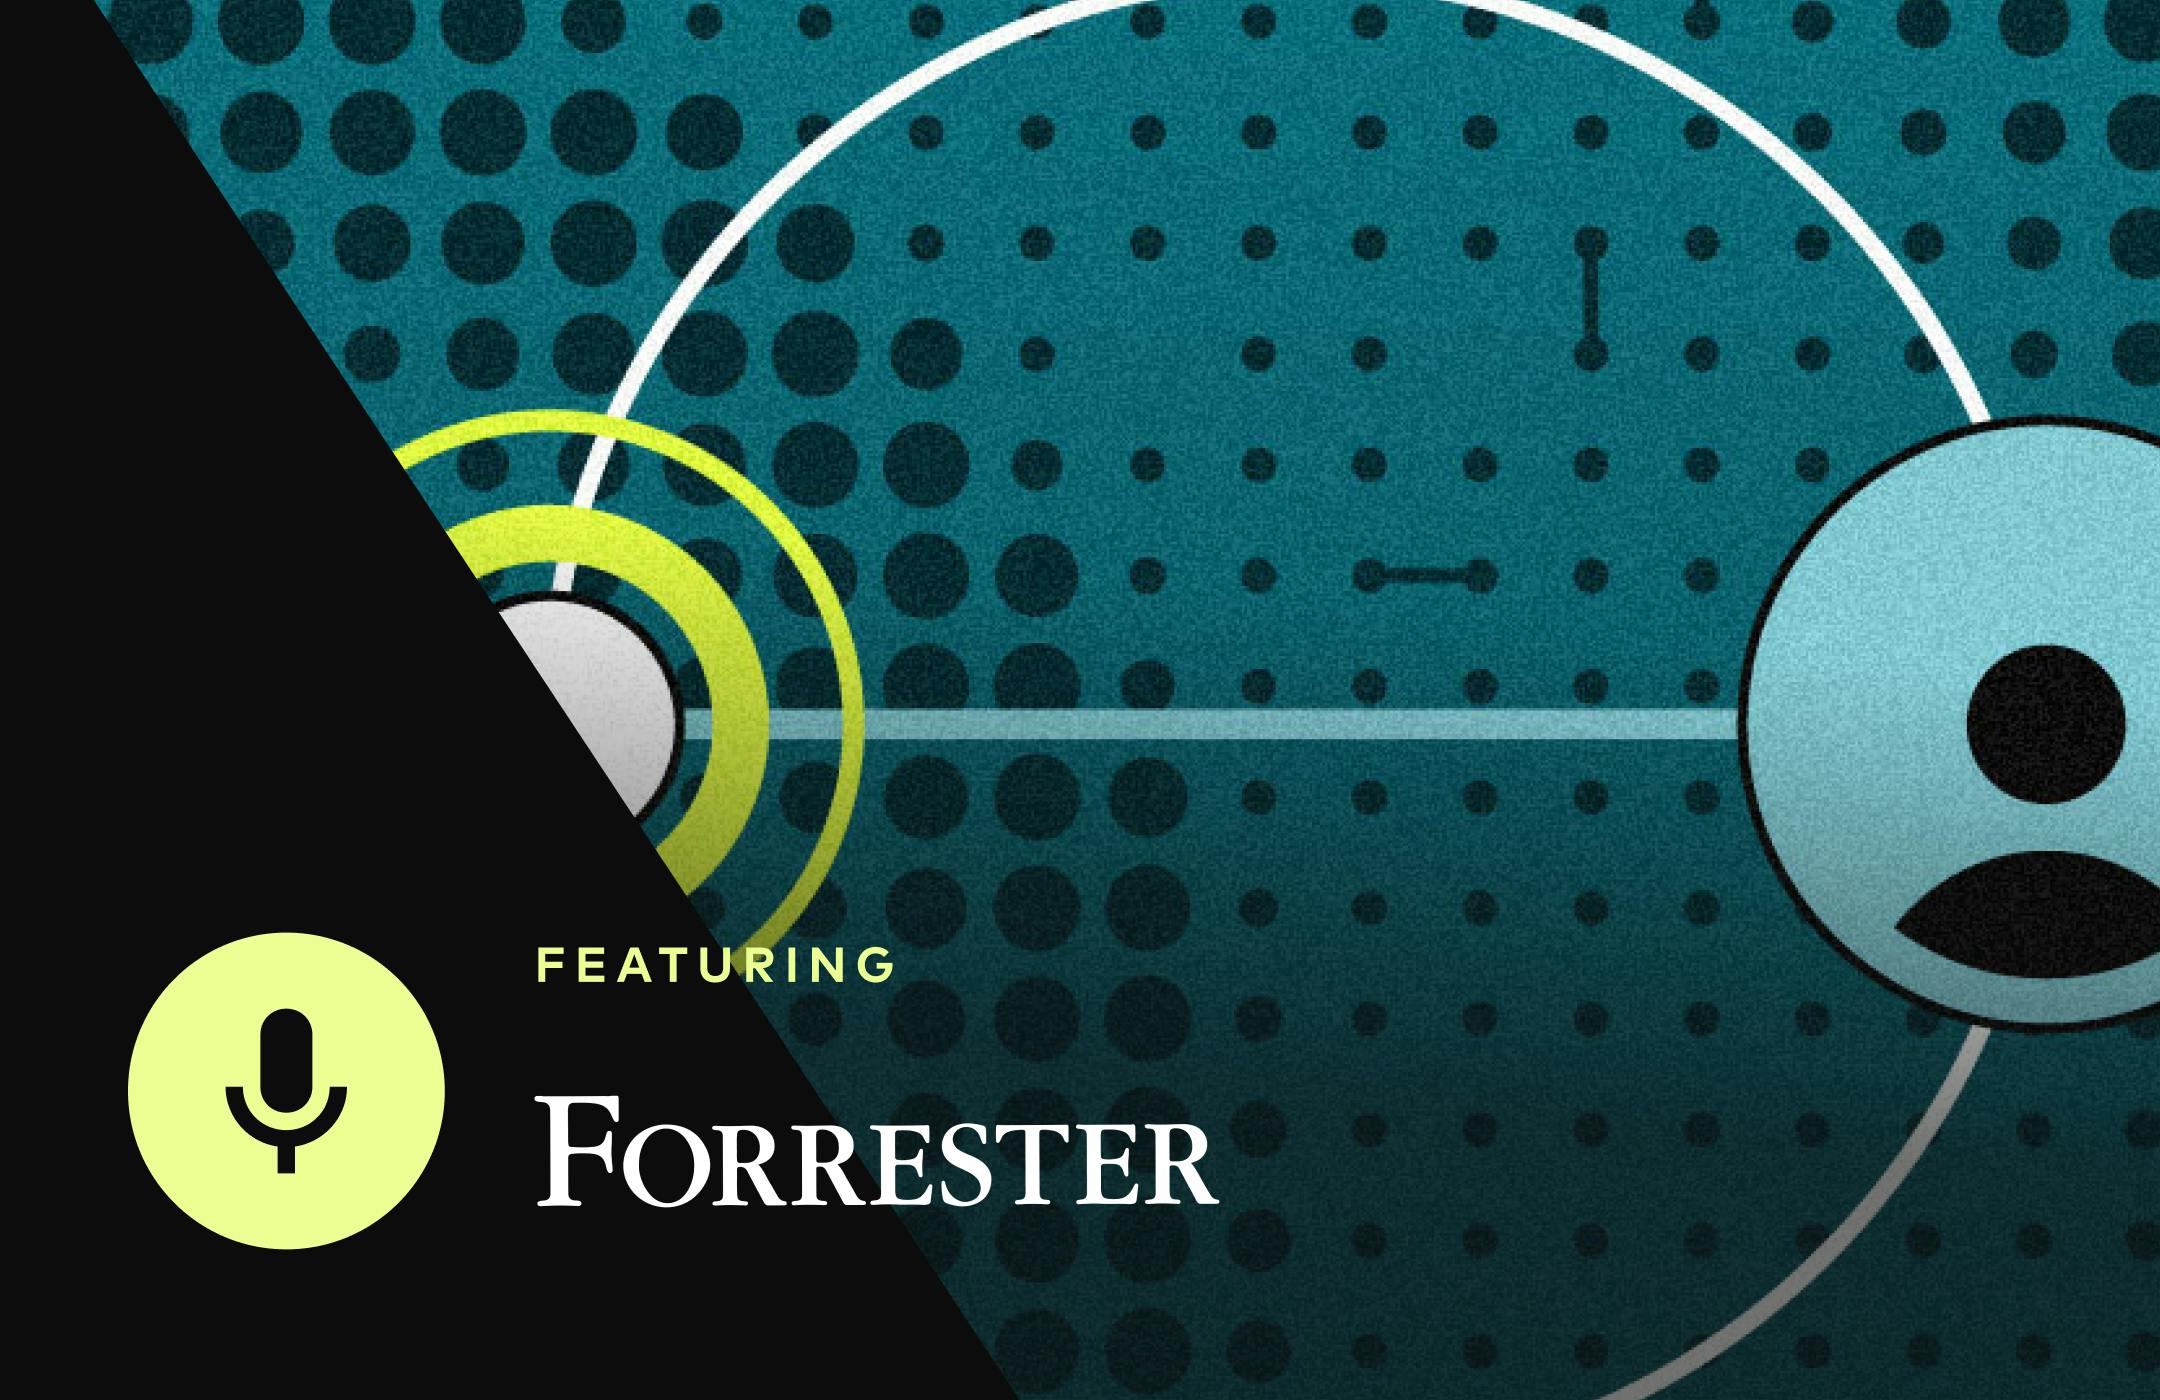 A webinar featuring Forrester